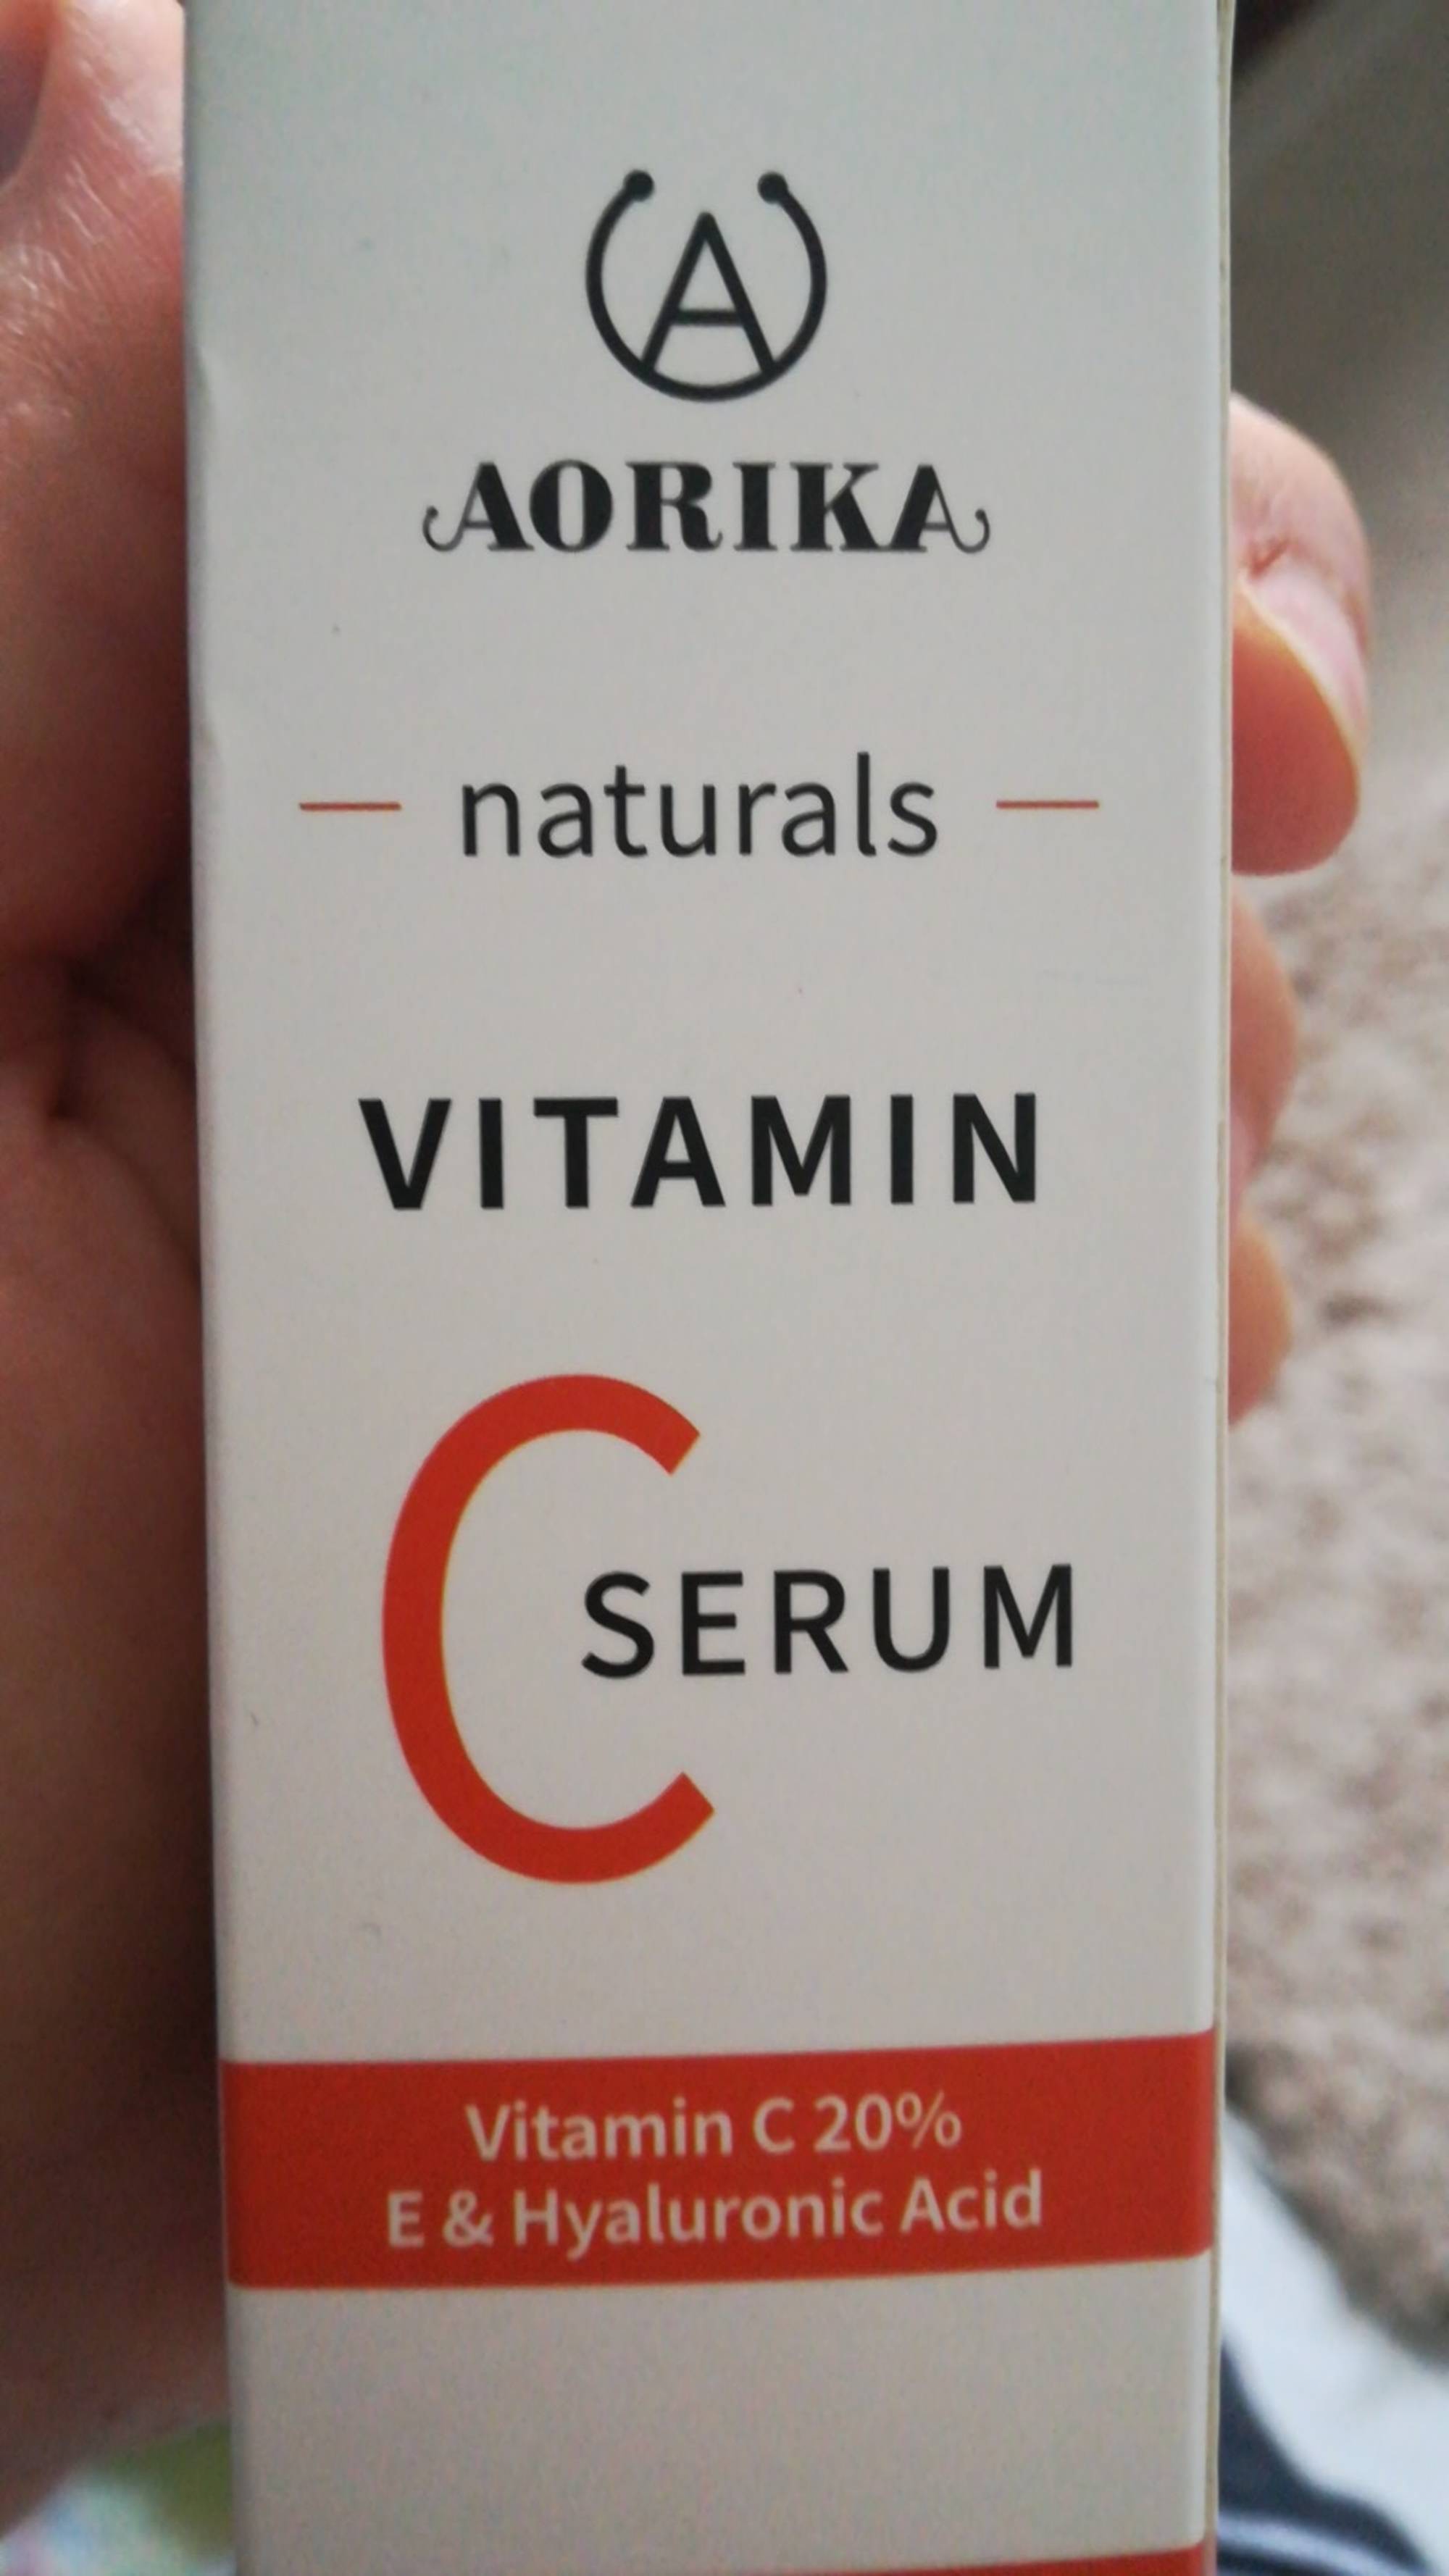 AORIKA - Naturals - Vitamin C serum